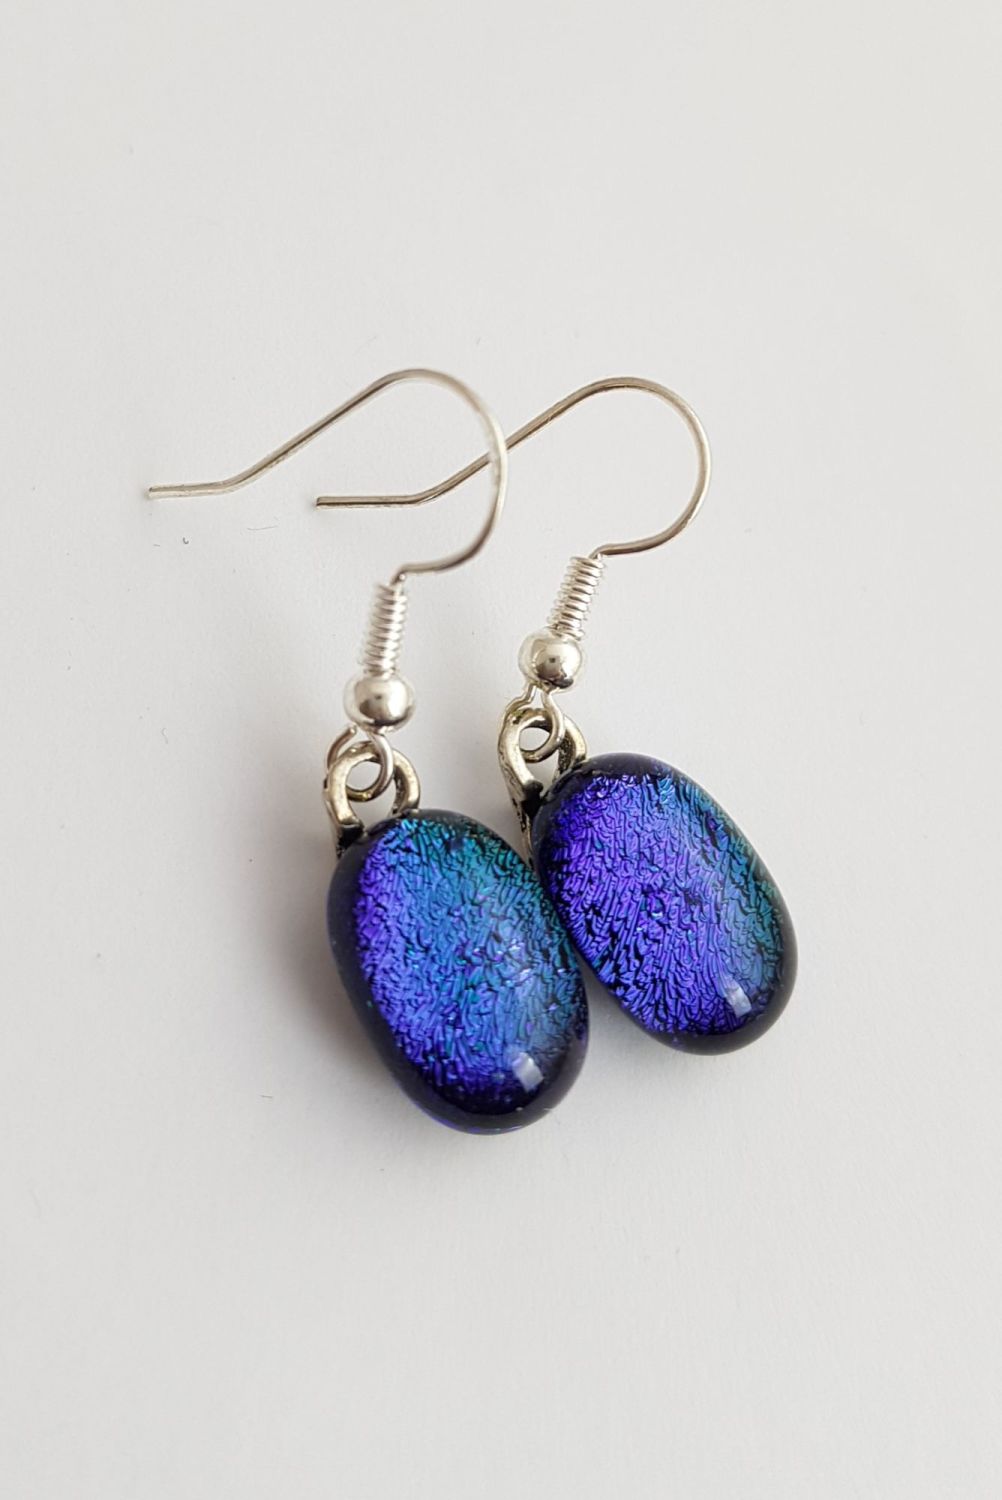 Dichroic peacock blue fused glass earrings